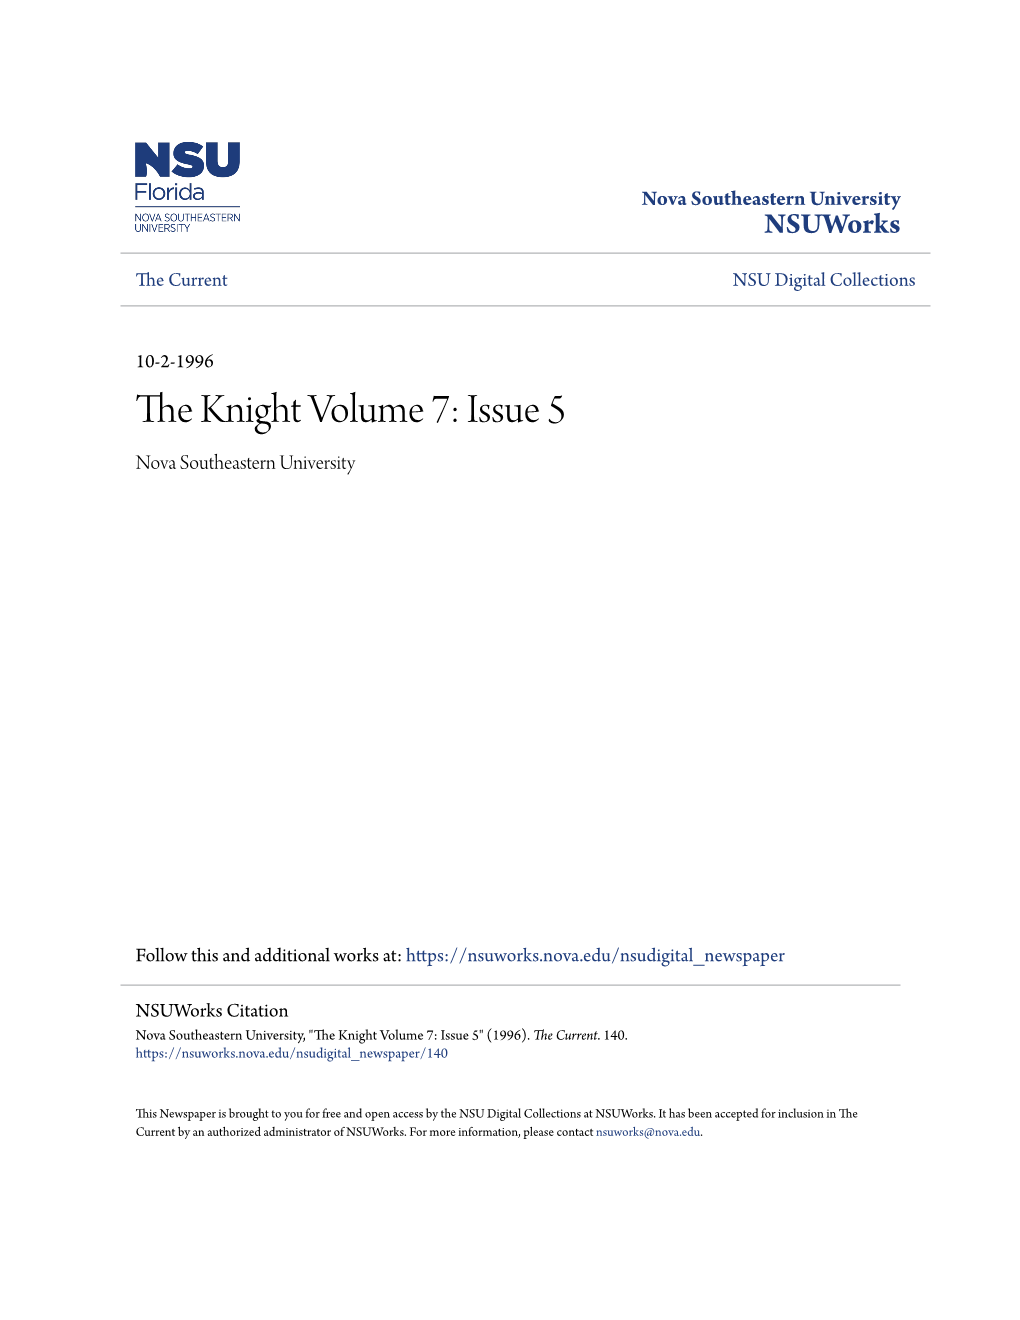 The Knight Volume 7: Issue 5 Nova Southeastern University